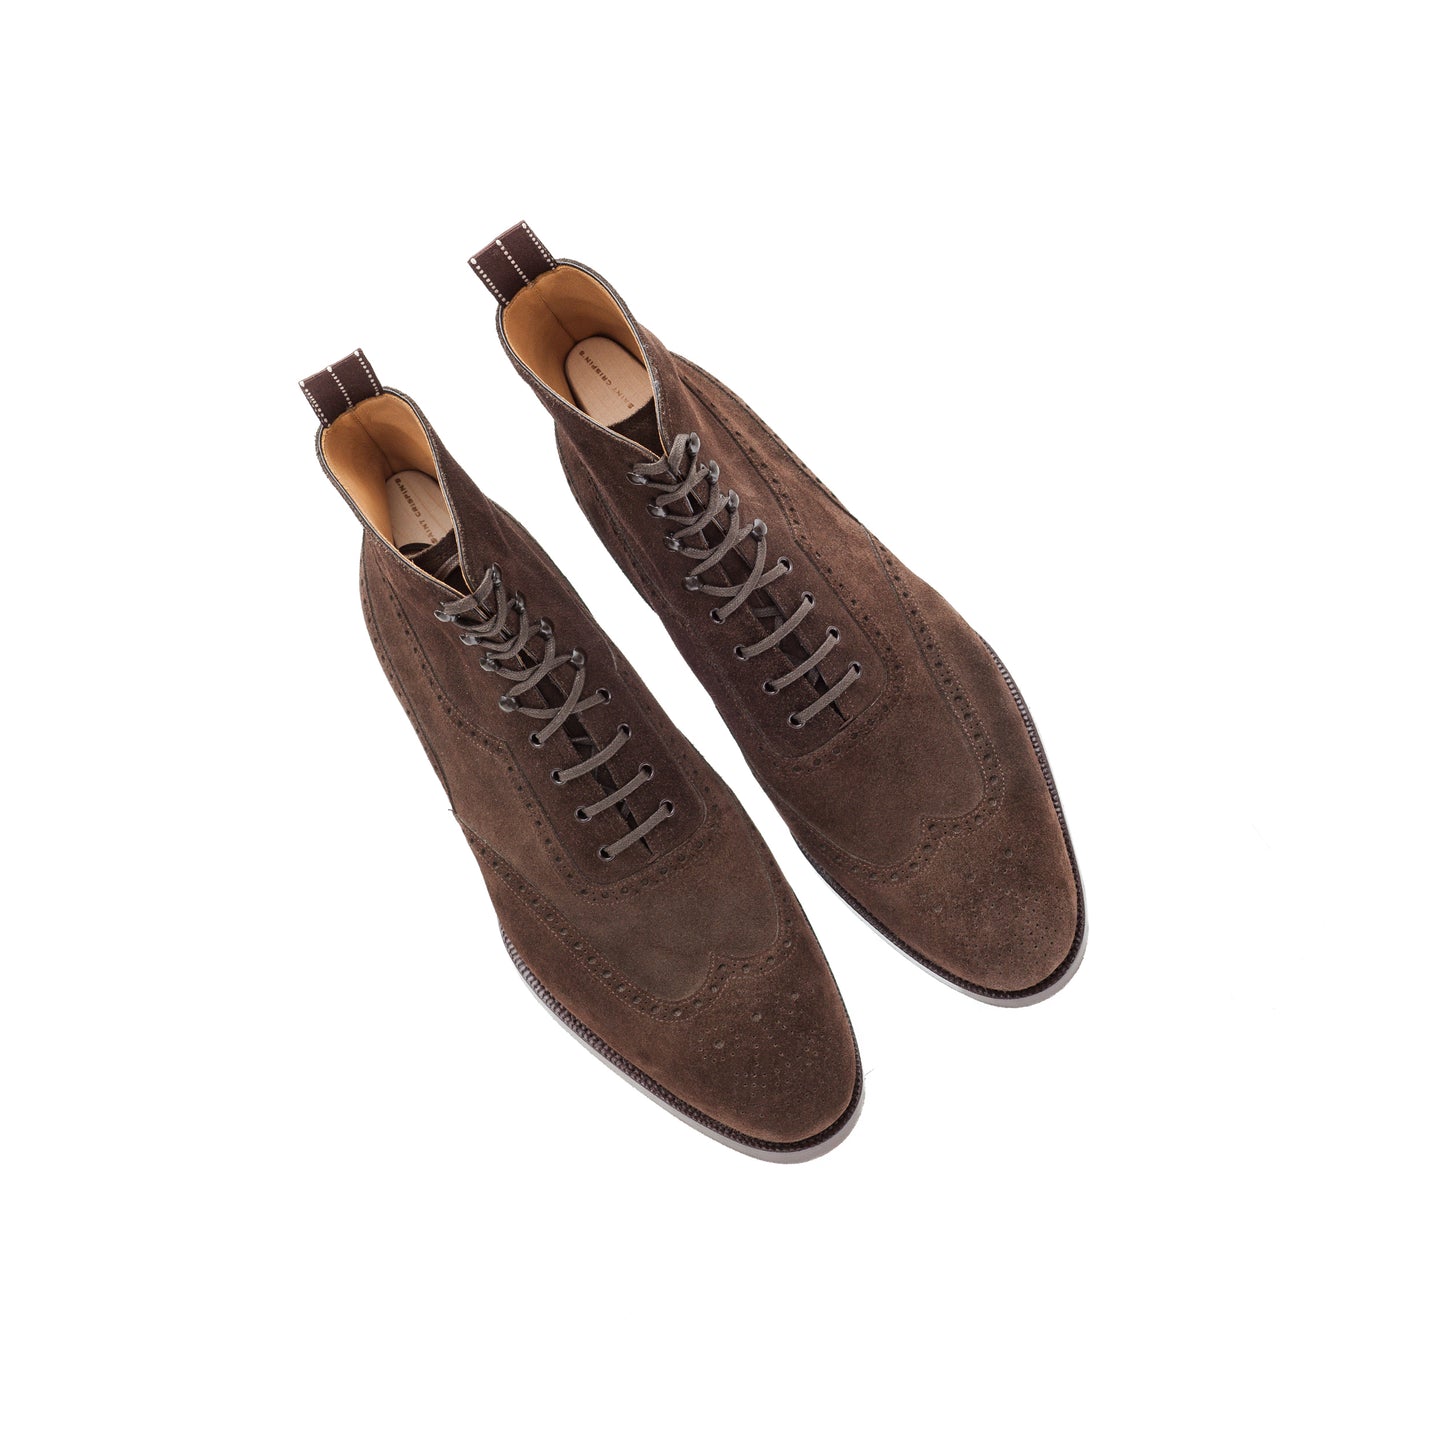 Elegant Oxford Boots in dark brown suede leather